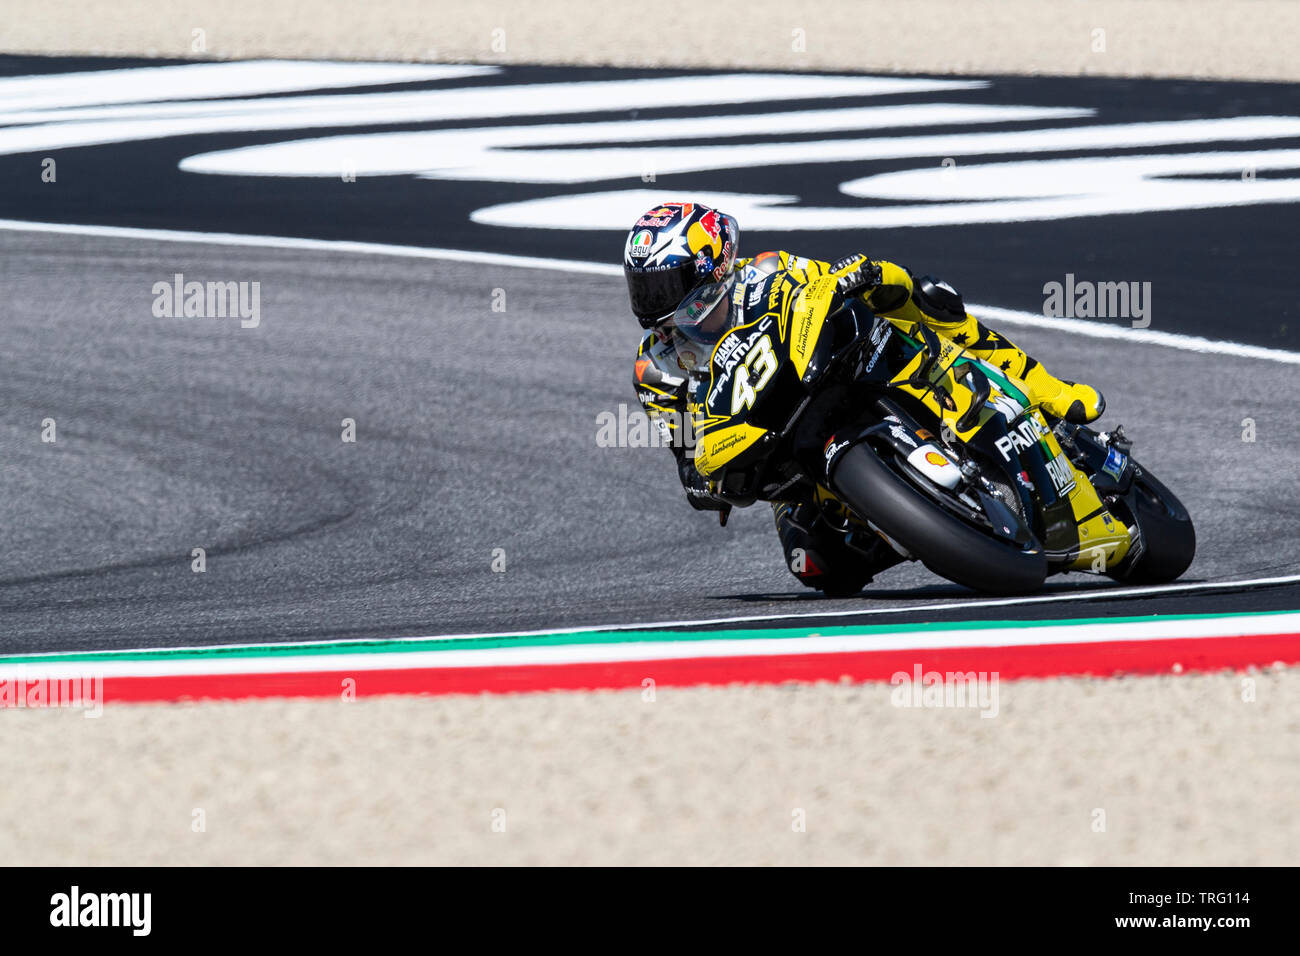 Italian MotoGP 2019 at Mugello Circuit Scarperia Italy 02/06/2019 Stock  Photo - Alamy